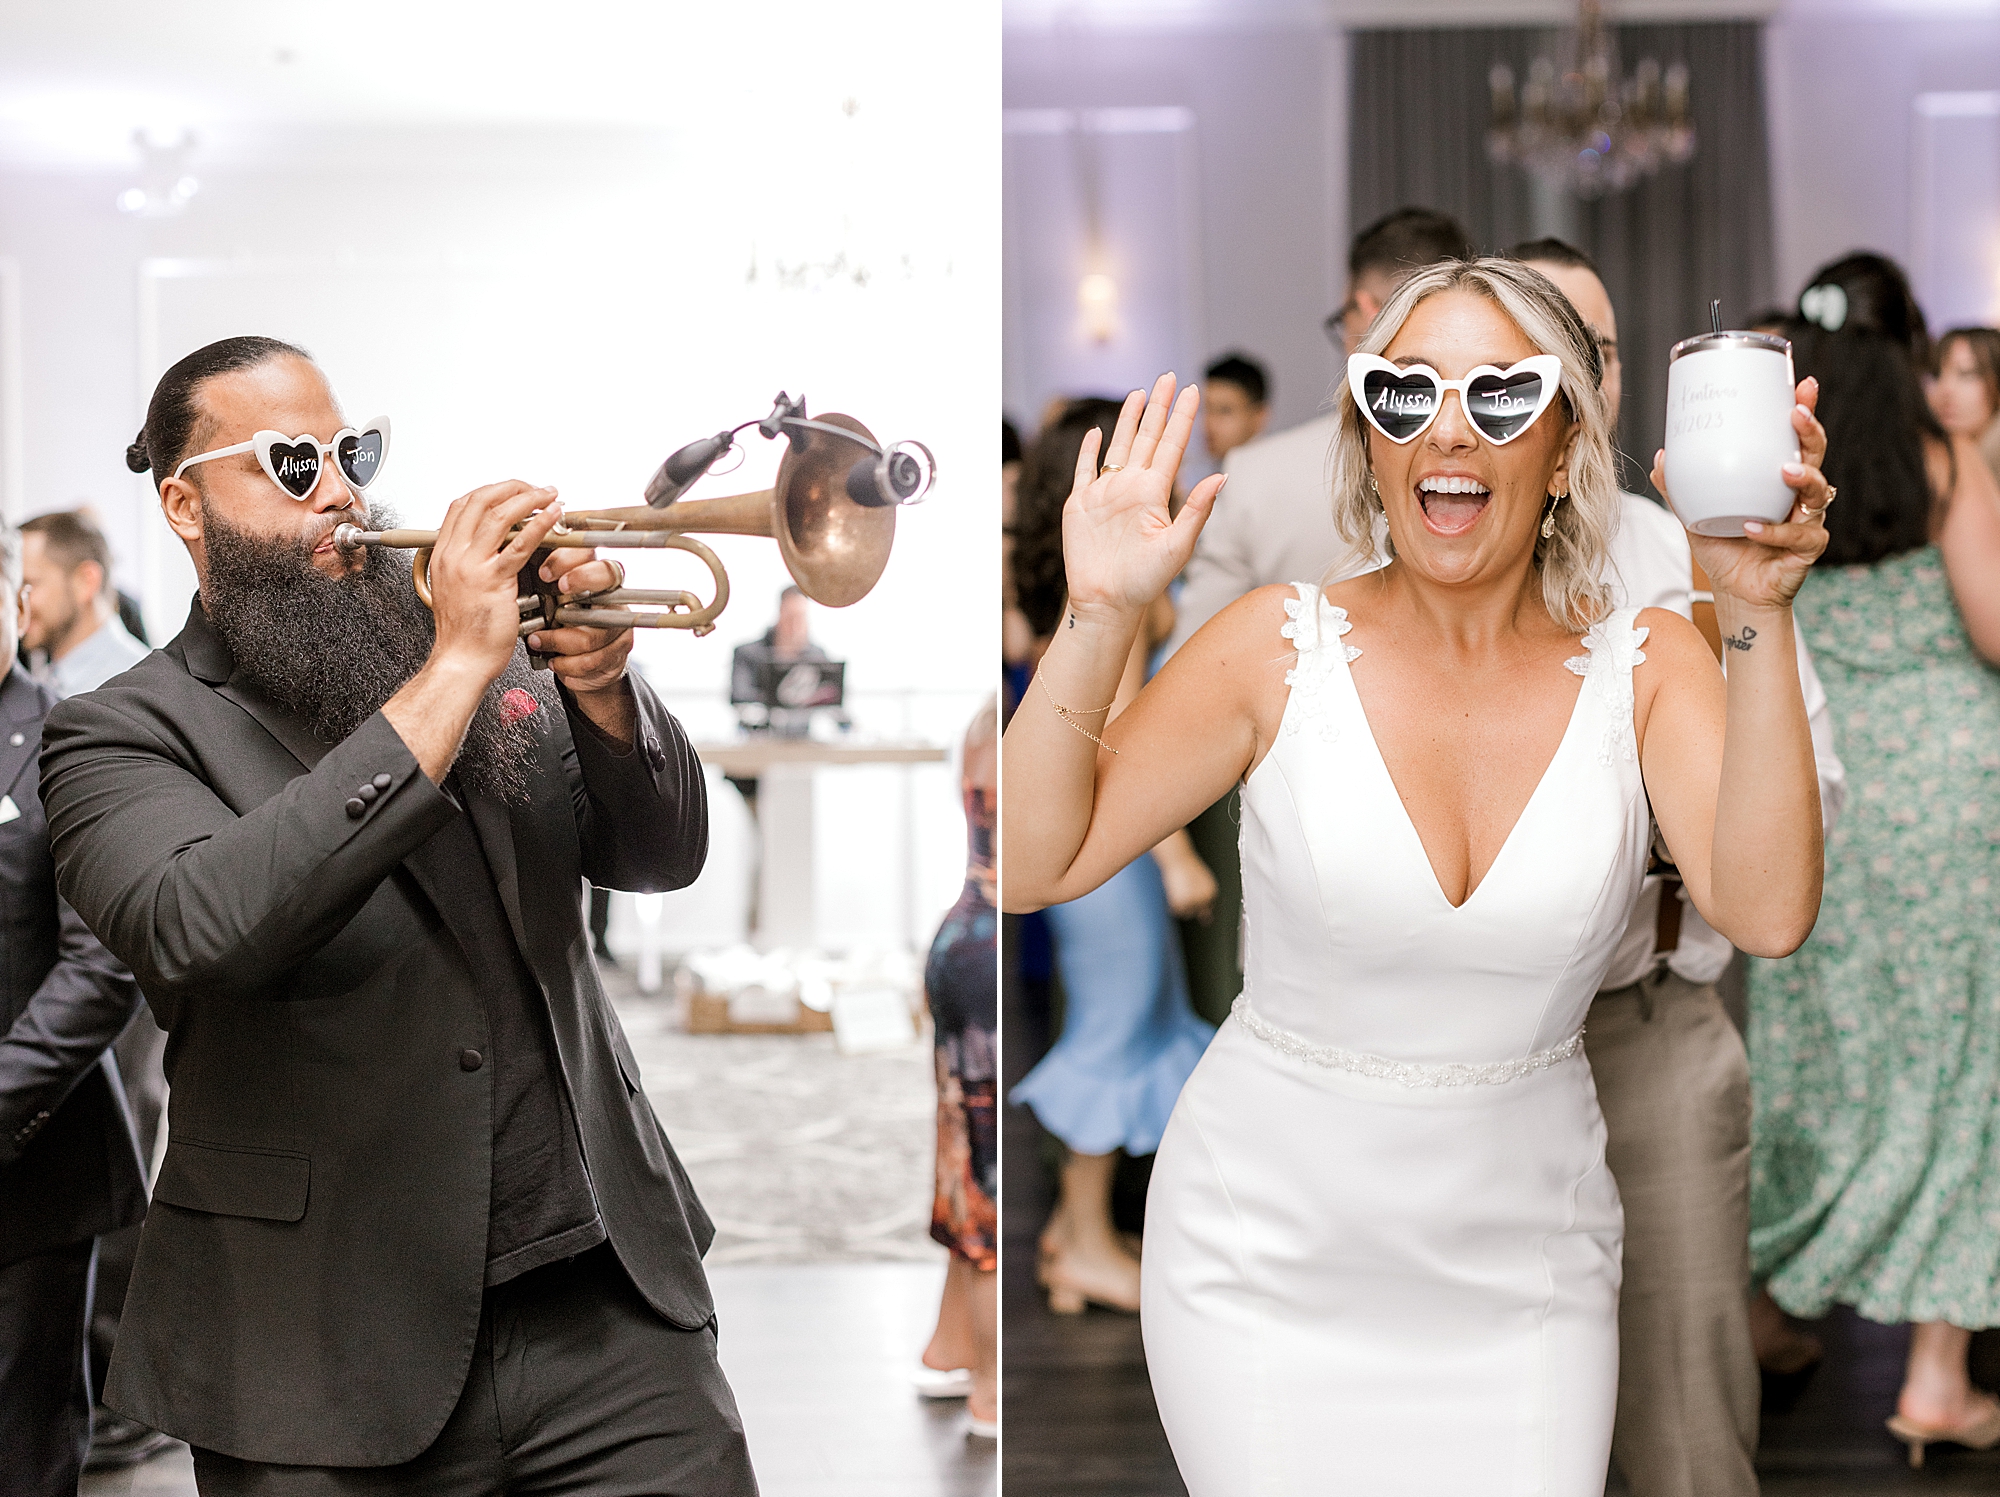 bride dances in heart glasses wile trumpet player wears white heart glasses